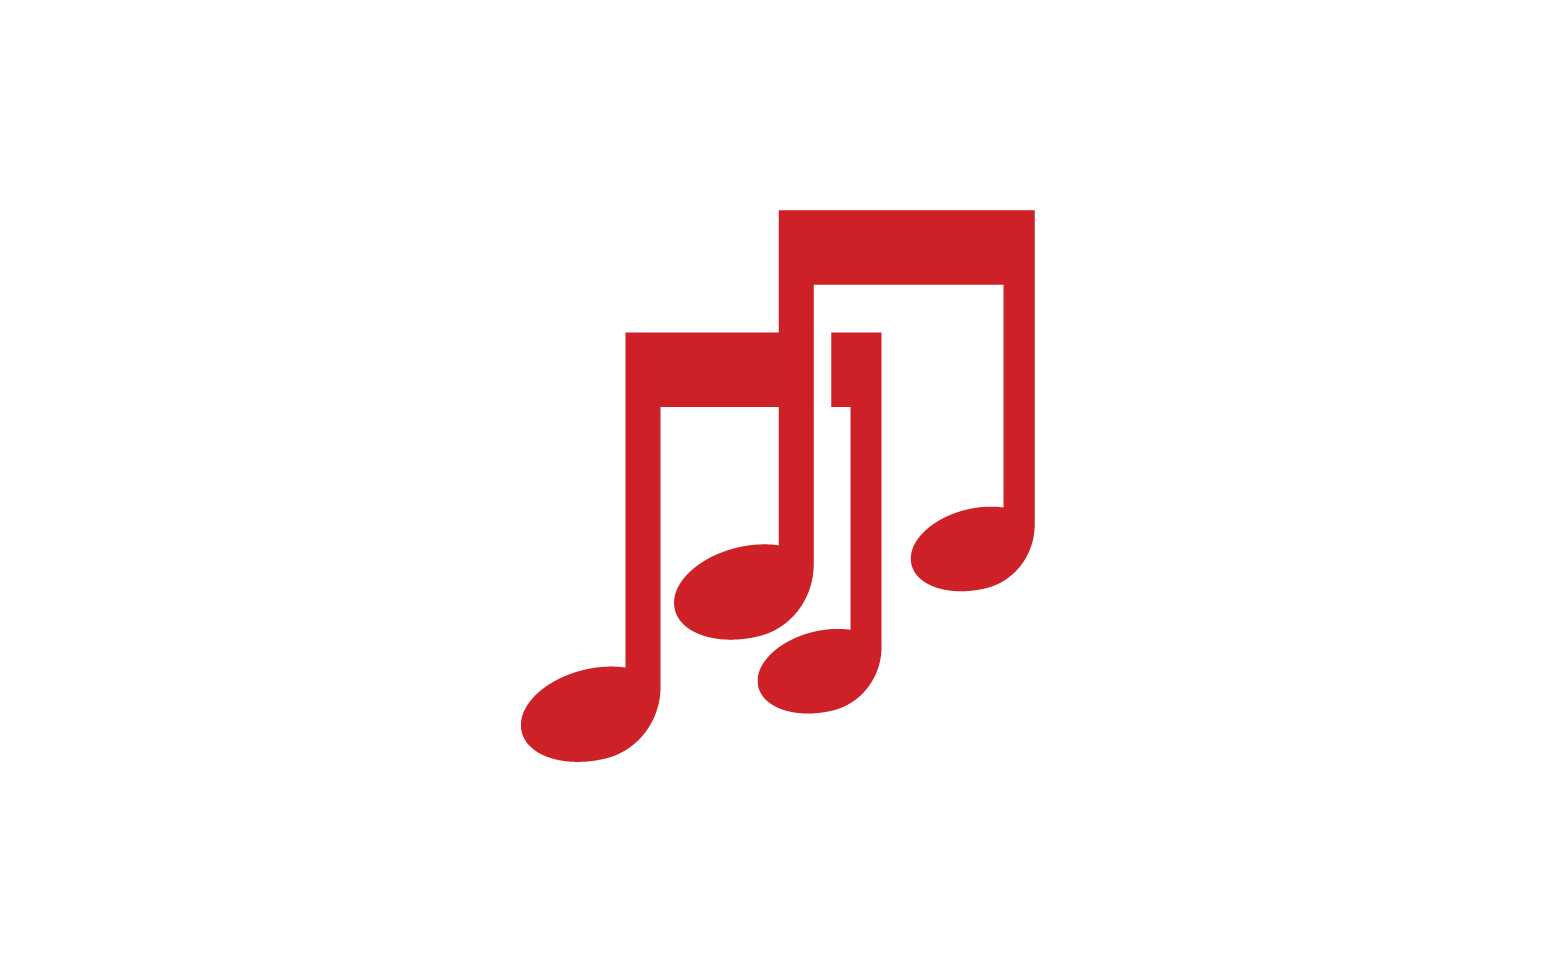 Music sound player app icon logo v.15